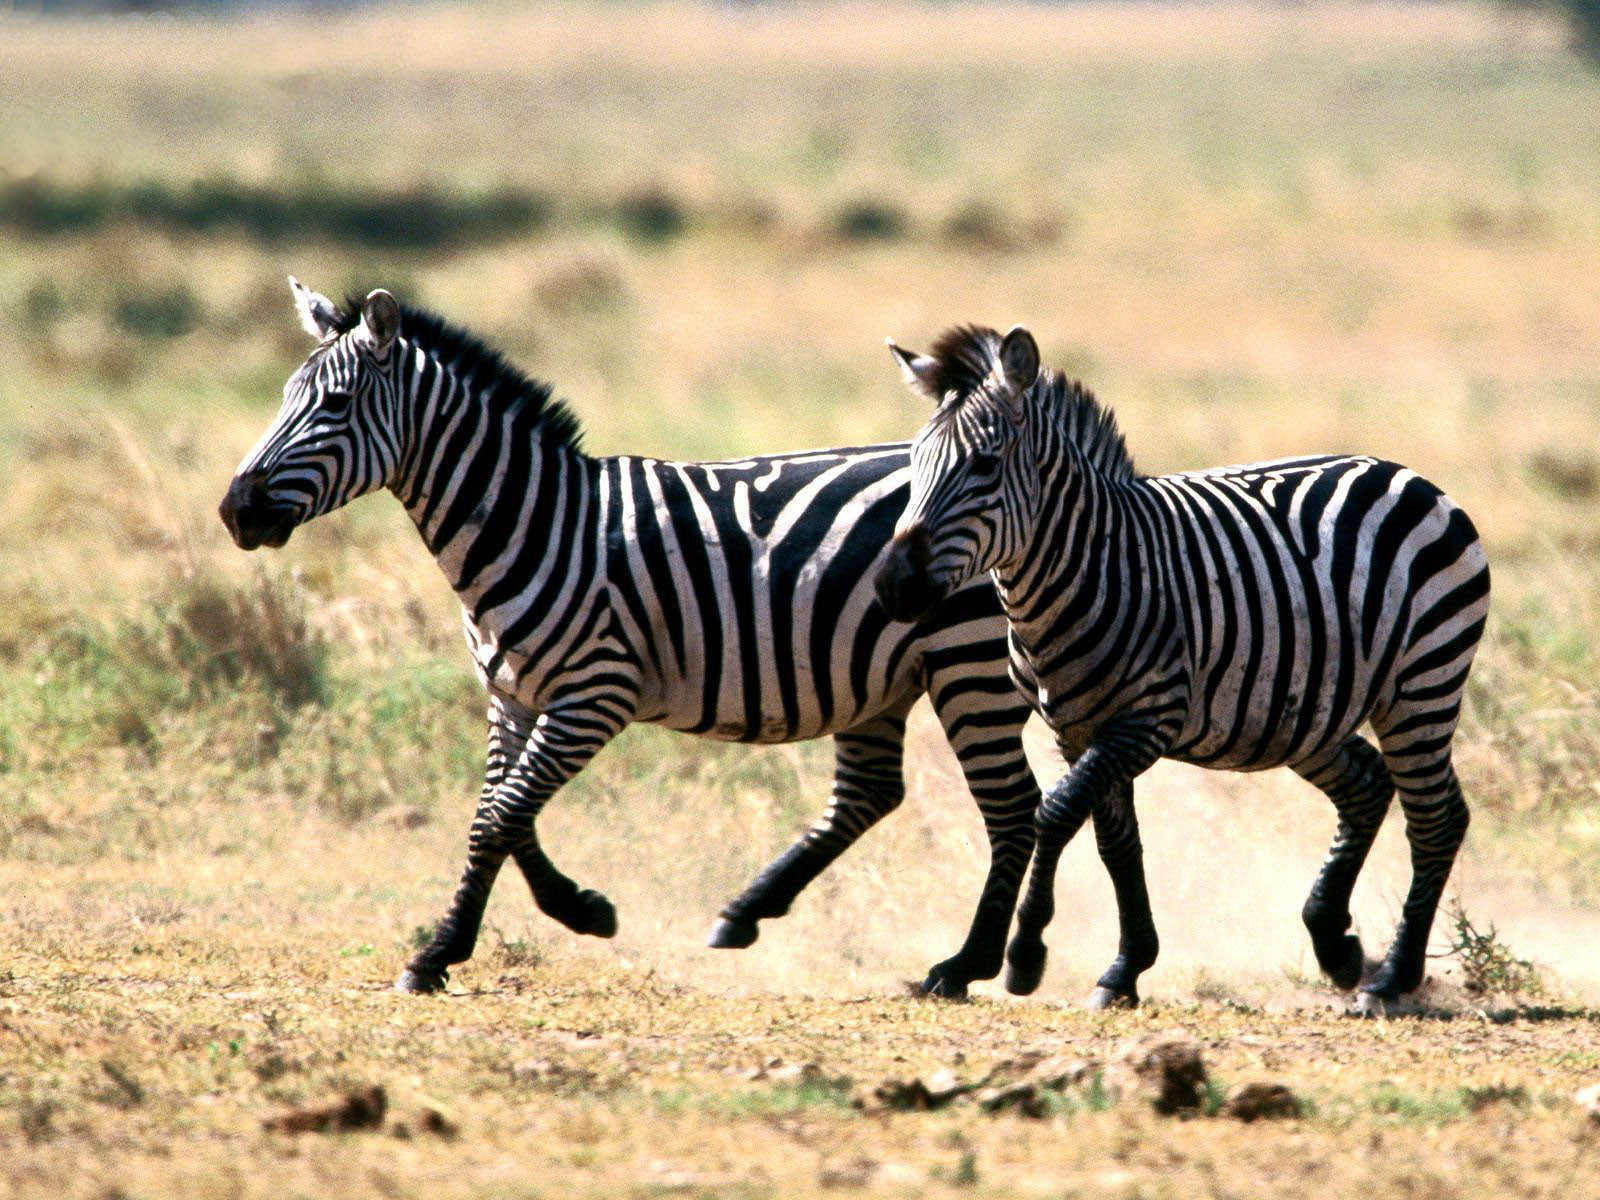 Zebra, Animal, Horse, Black And White, Running